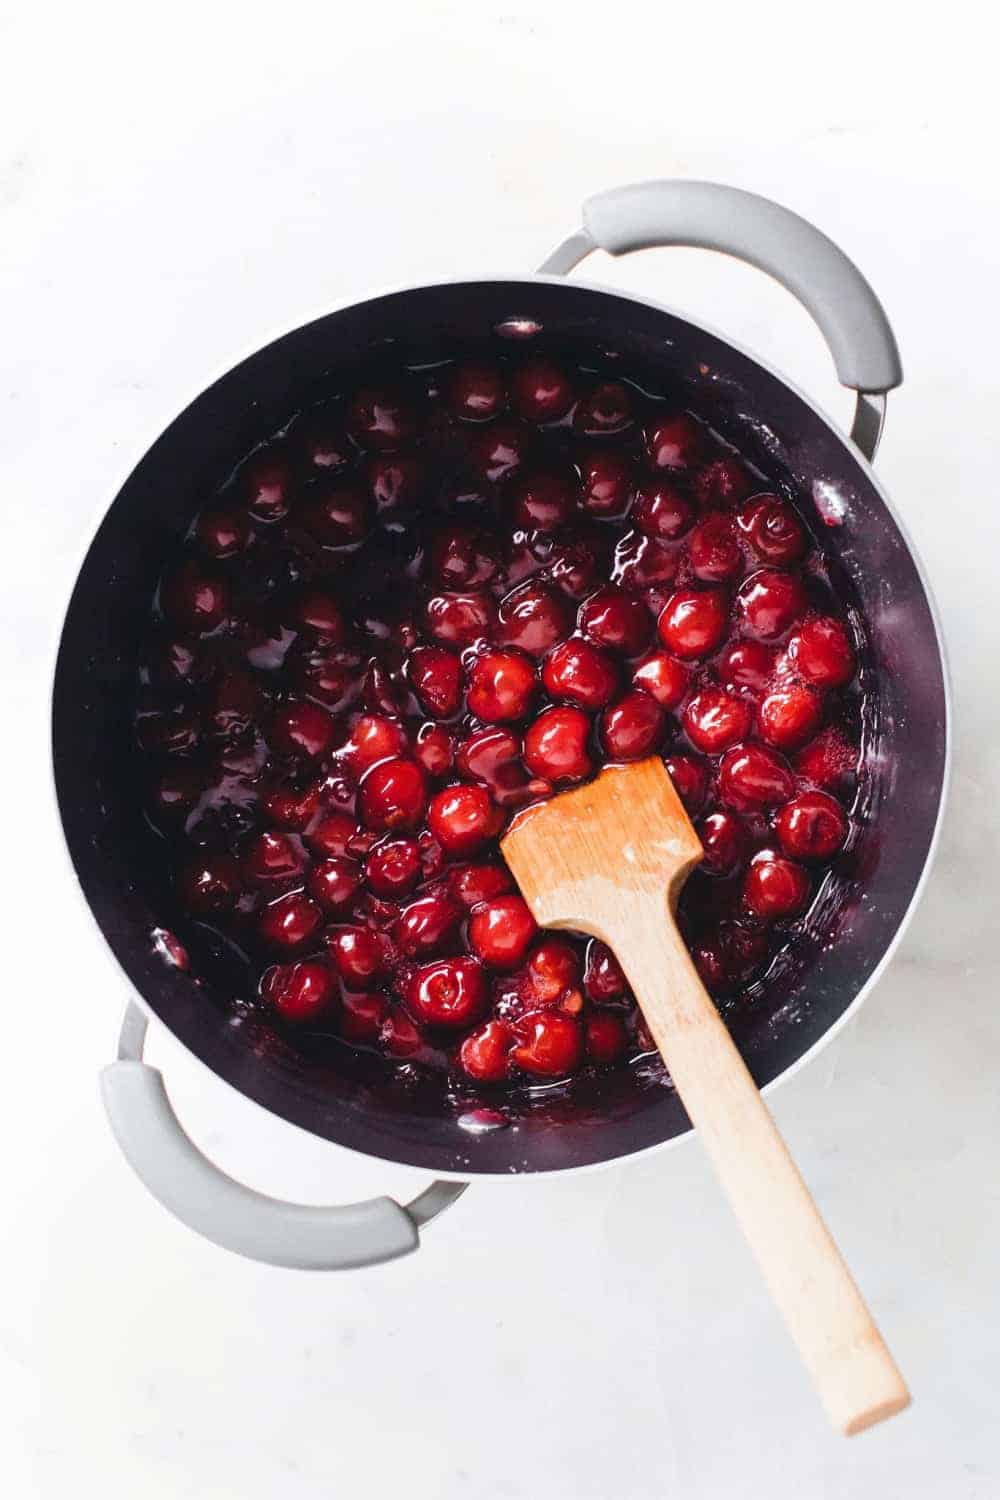 Homemade Cherry Pie Filling Recipe | My Baking Addiction